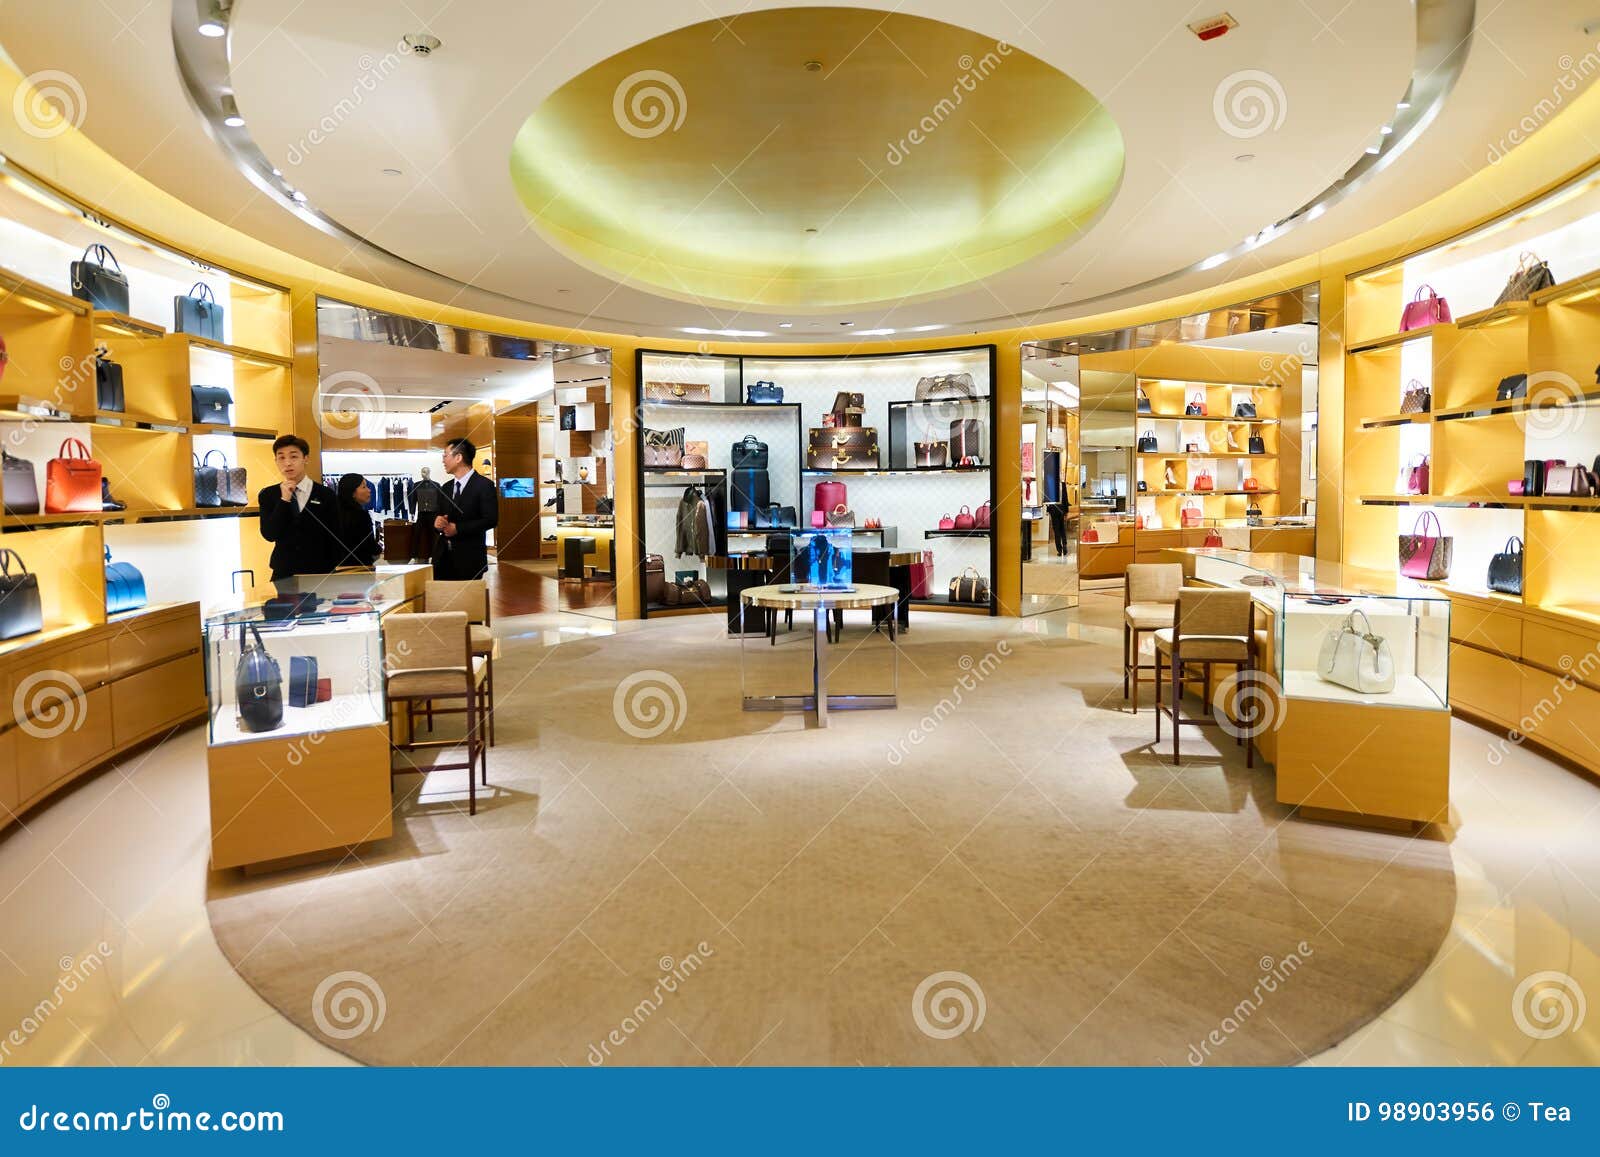 Louis Vuitton Emaar Store In Istanbul, Turkey